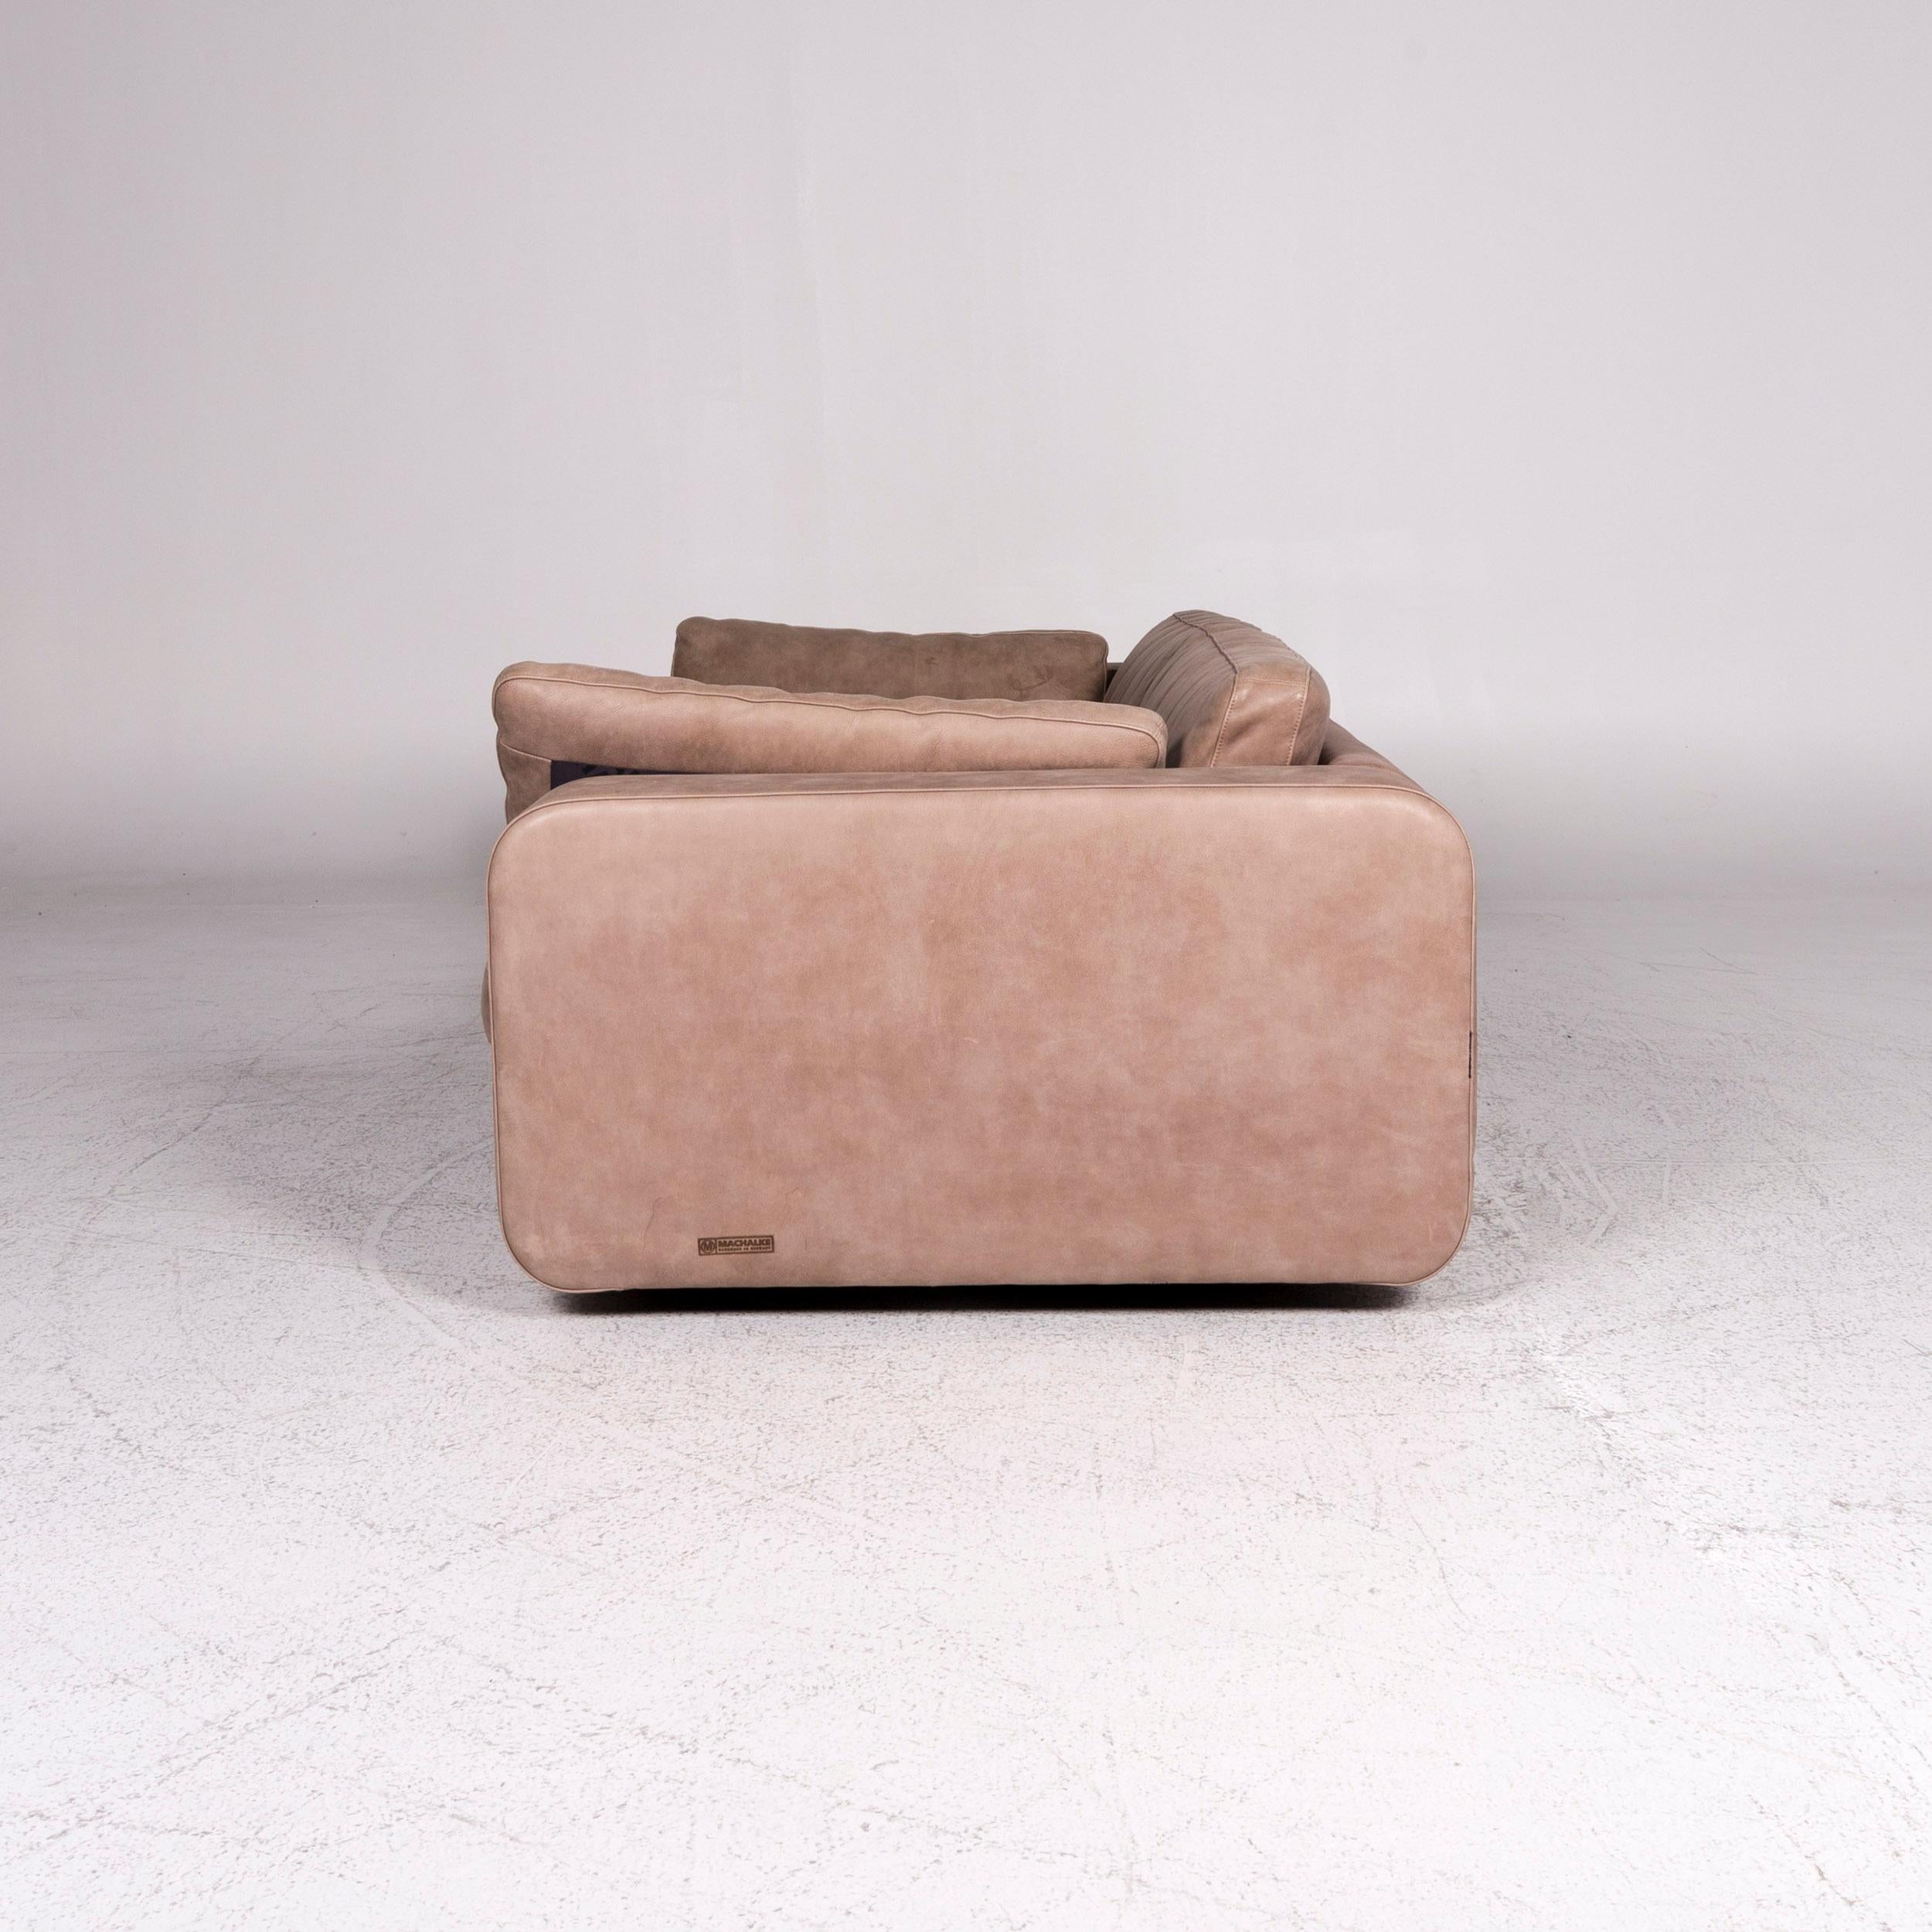 Machalke Leather Sofa Brown Beige Three-Seat Couch 3